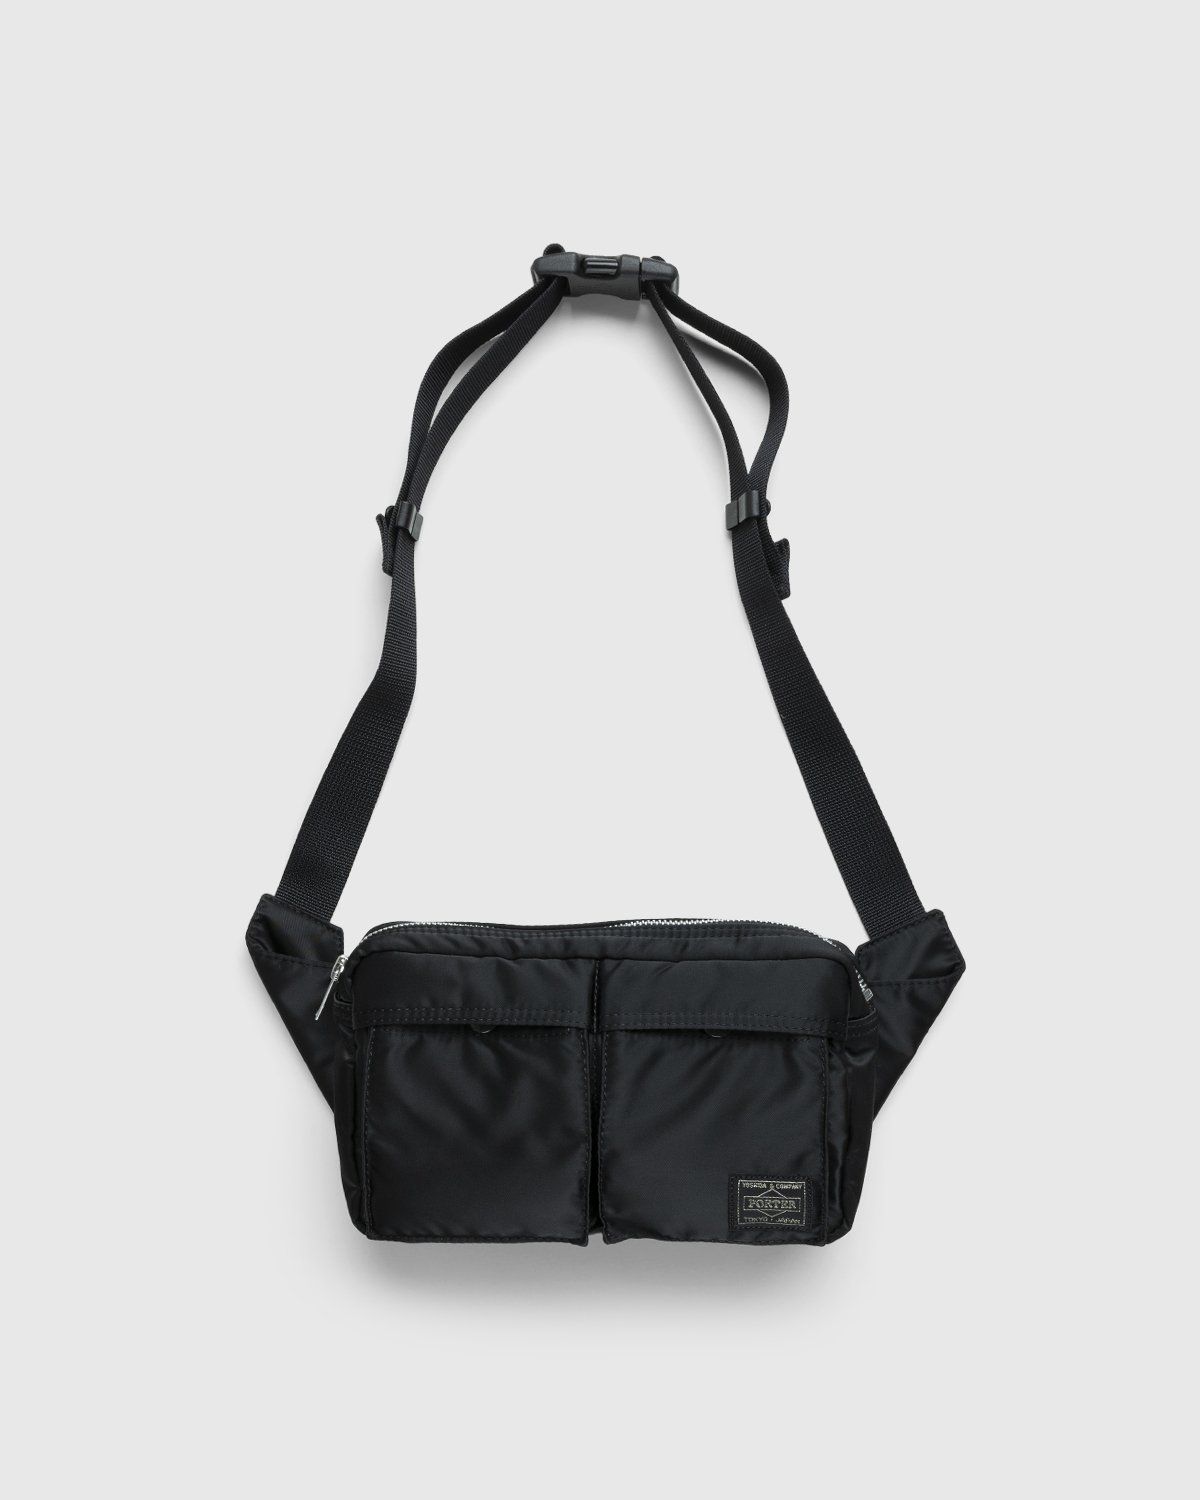 Yoshida Head Porter RIDE Waist Bag Shoulder bag Black Both men and women